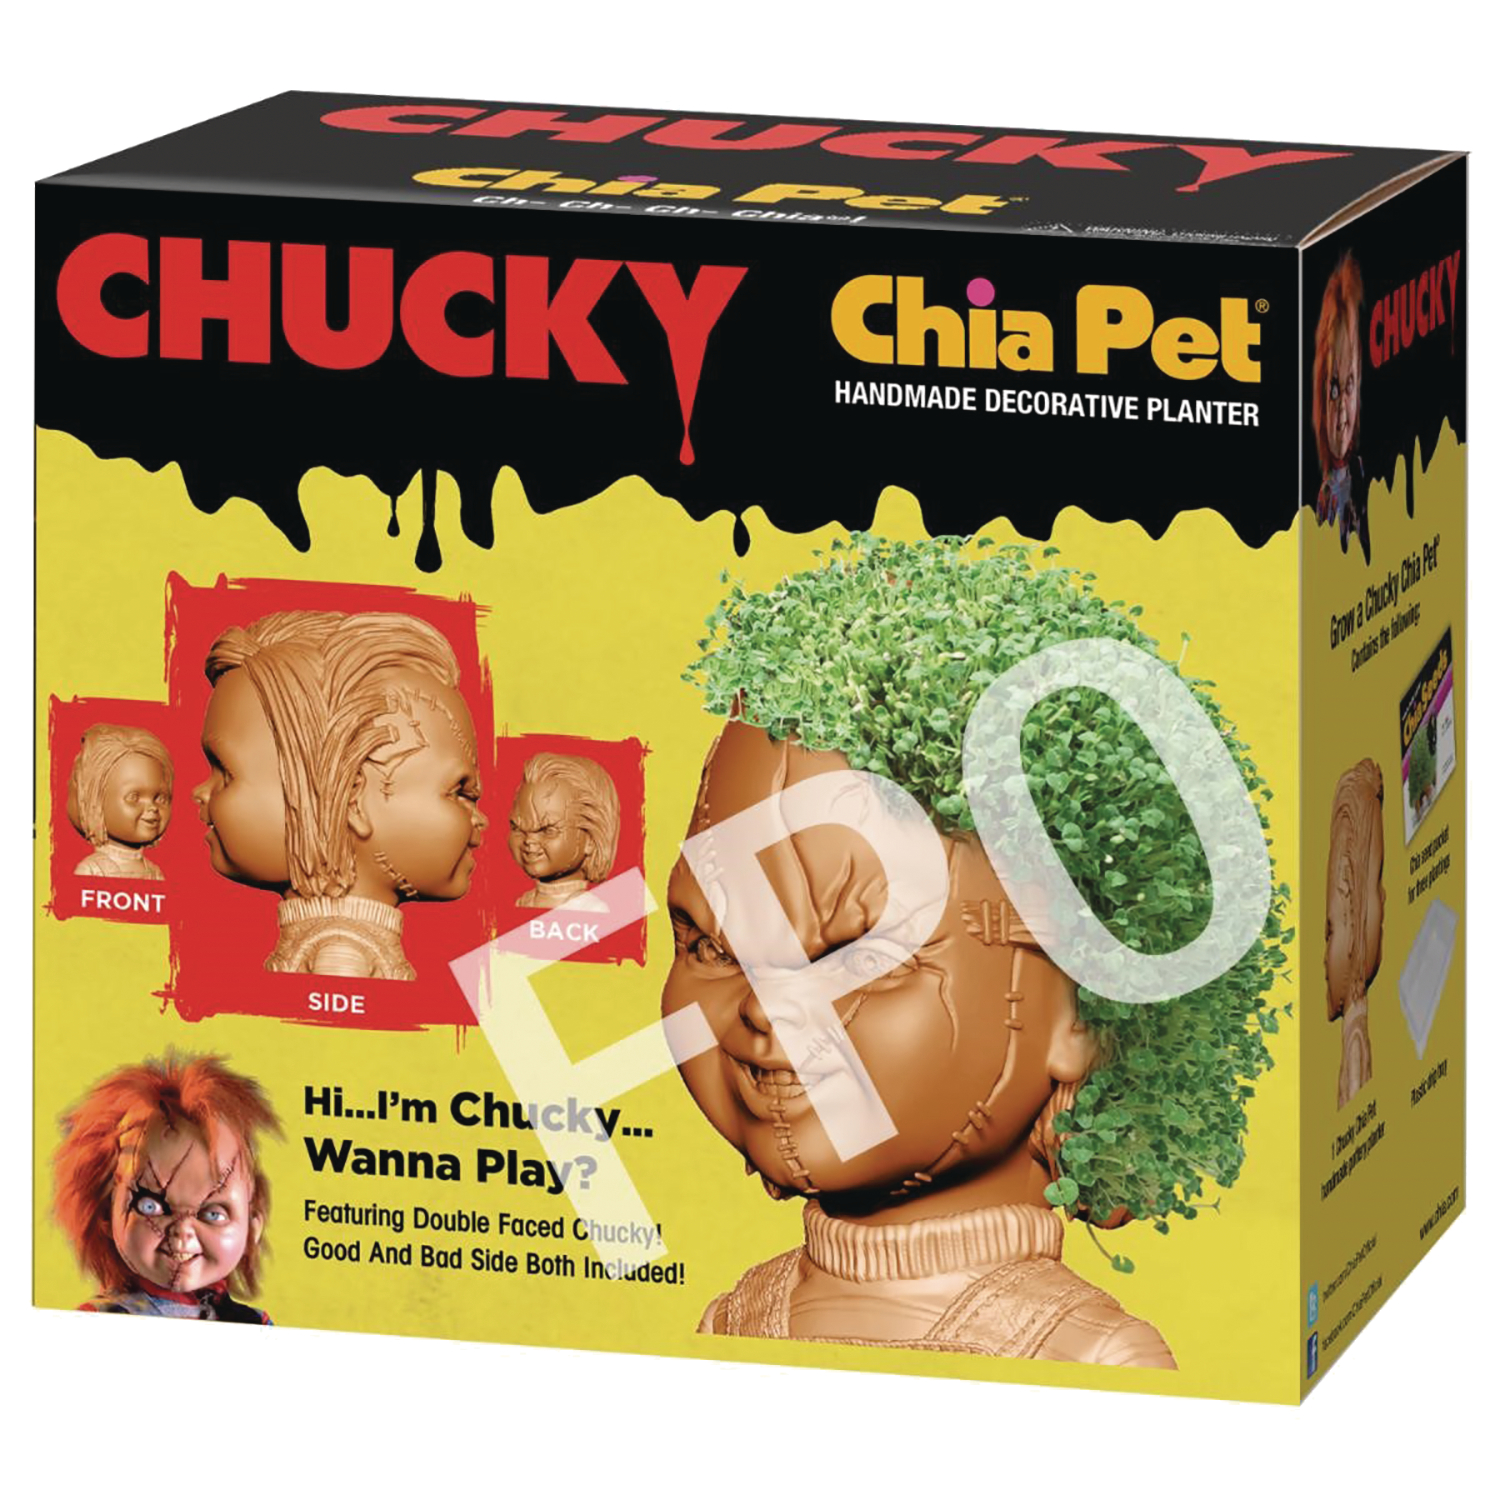 Chia Pet Childs Play Chucky